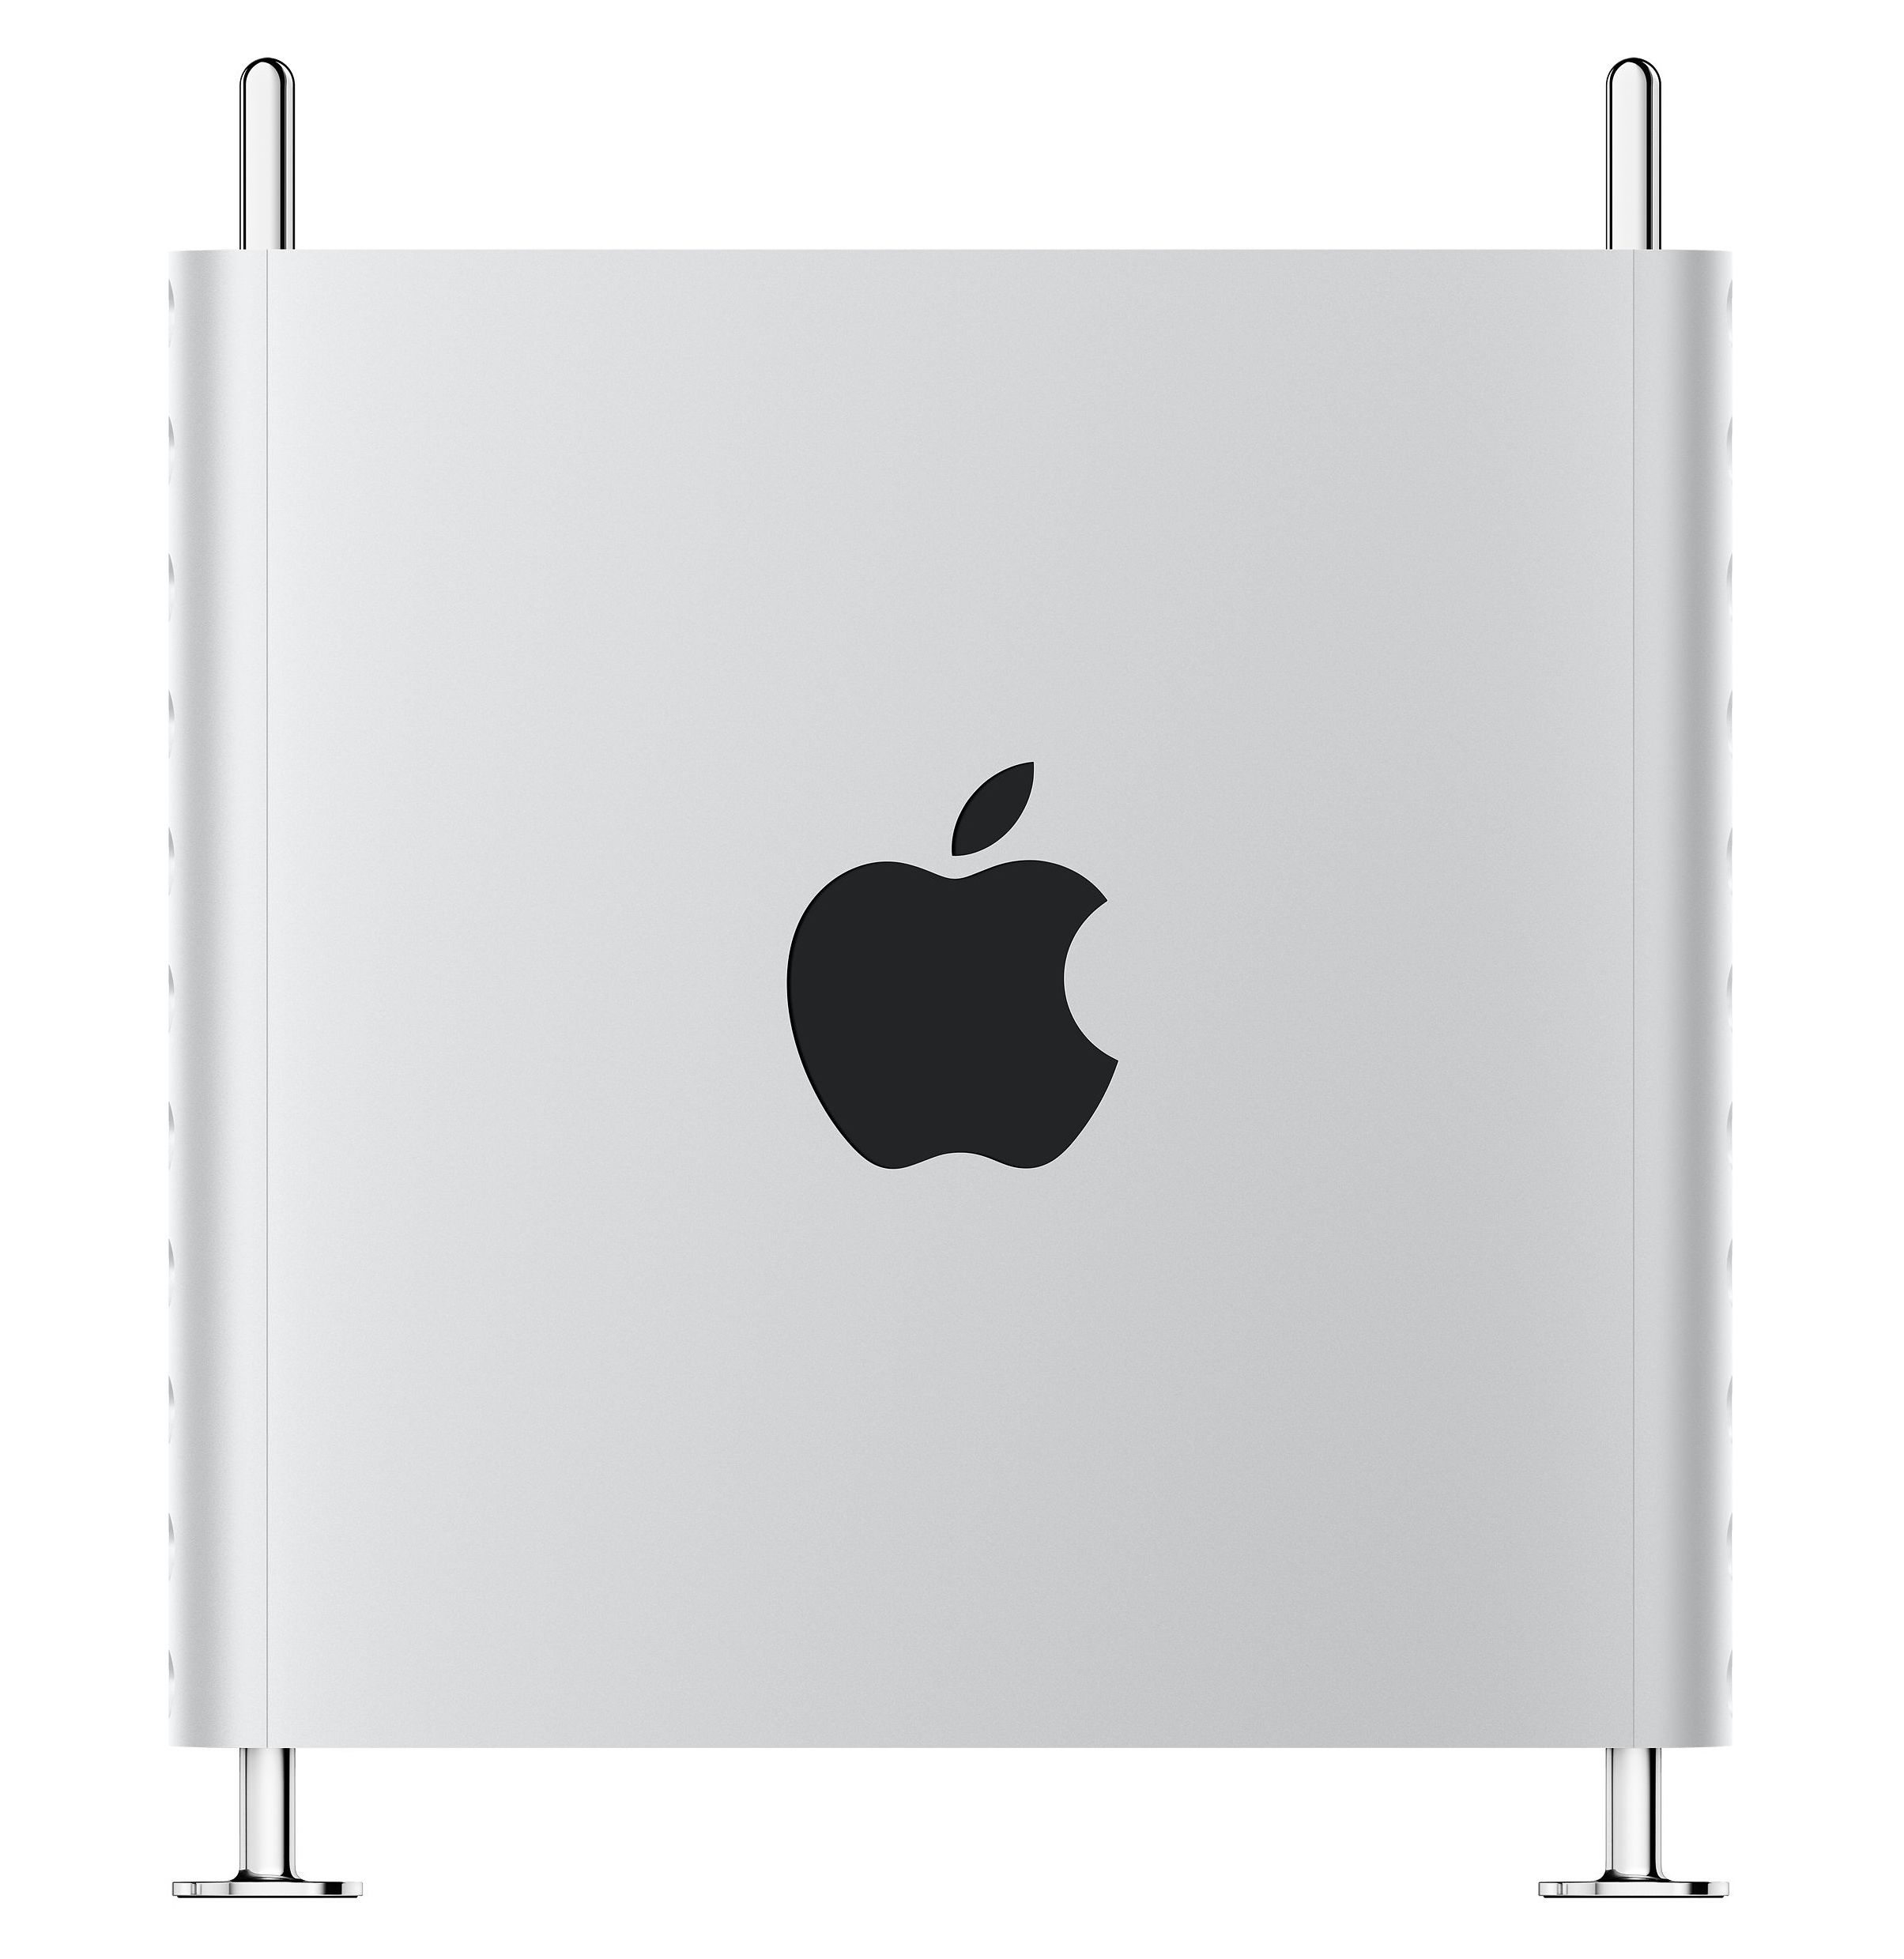 Mac Pro - 3,5-GHz 8‑core processor - 32 GB geheugen - 256 GB SSD (Nieuw)